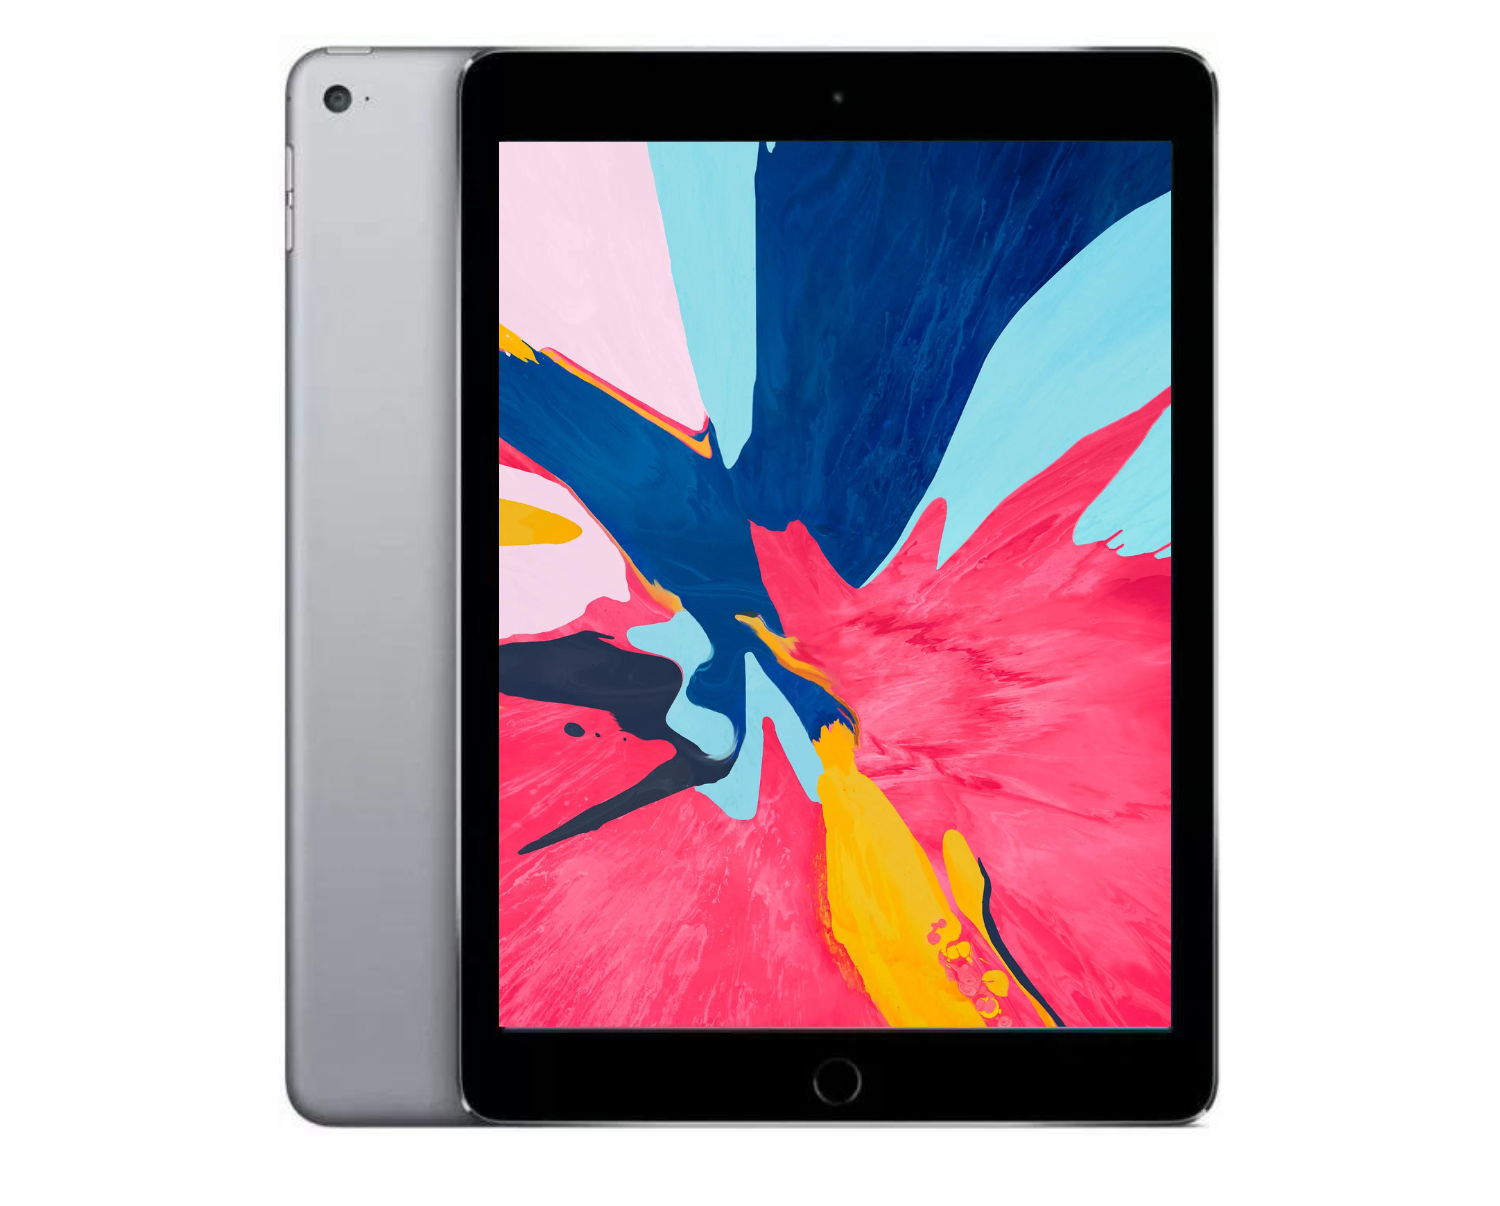 Apple iPad Air 2 64GB WiFi A1566 Space Grey at Affordable Mac